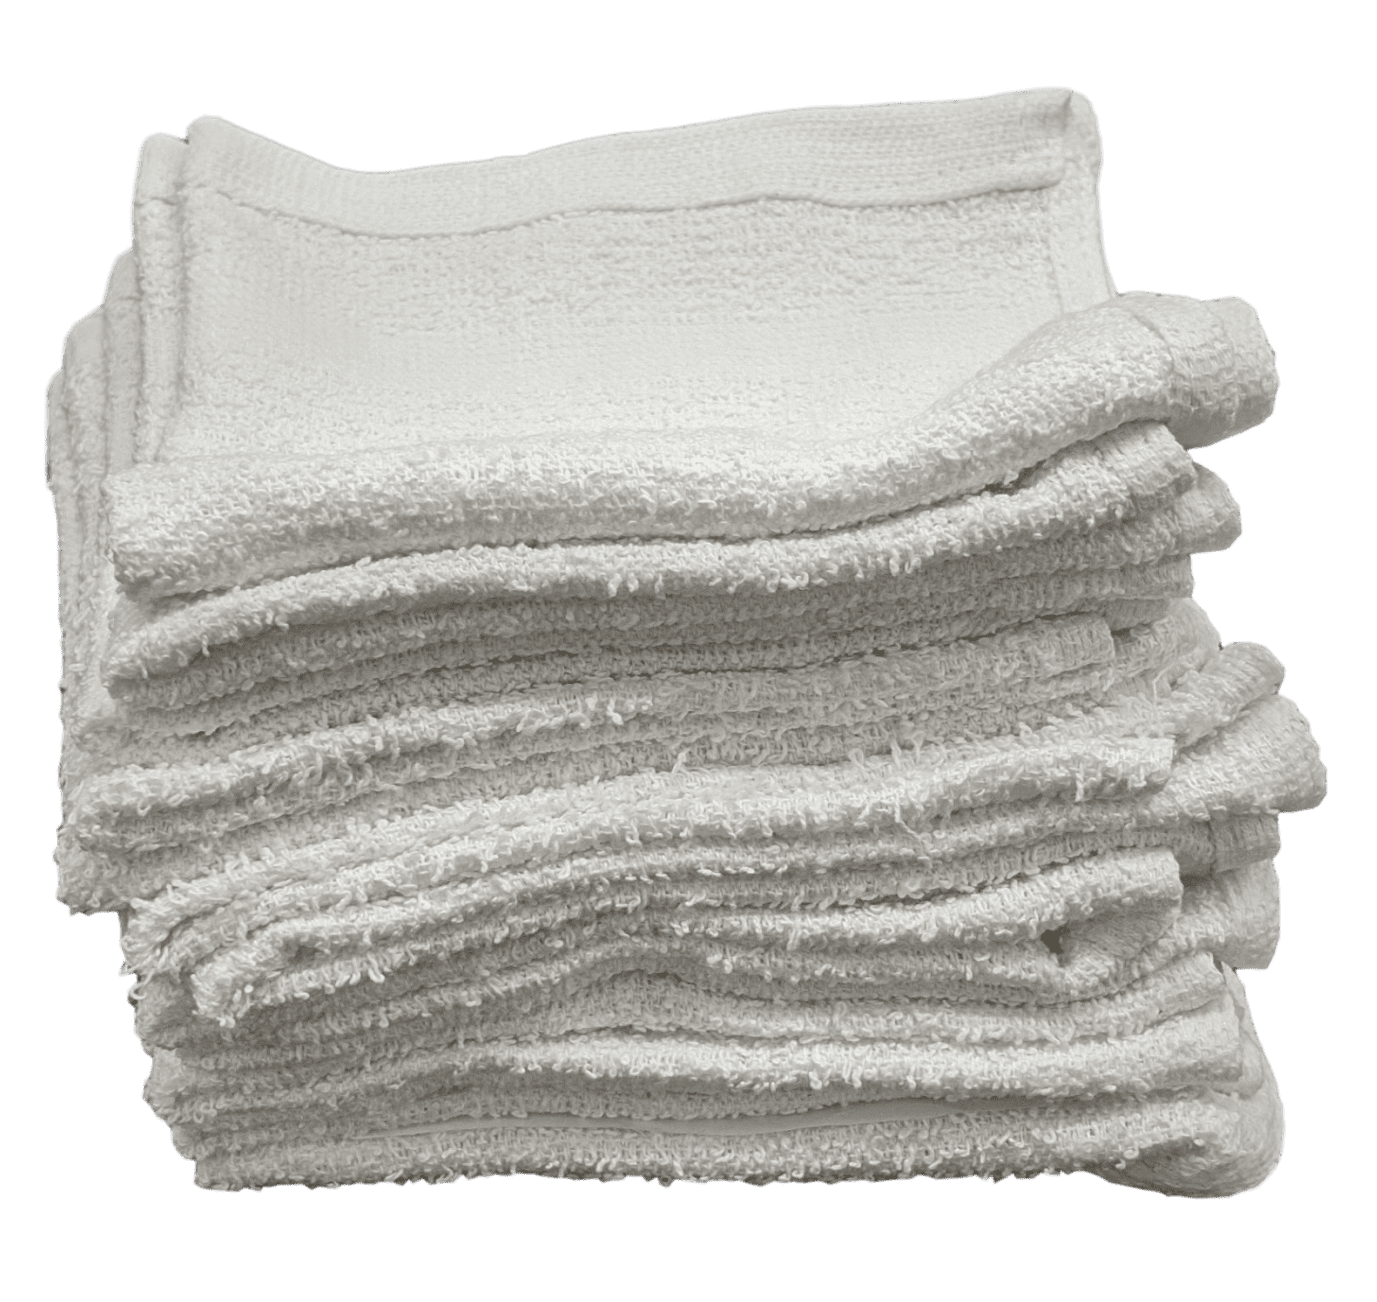 C Zebra Stripe Towels, Microfiber Face Towel